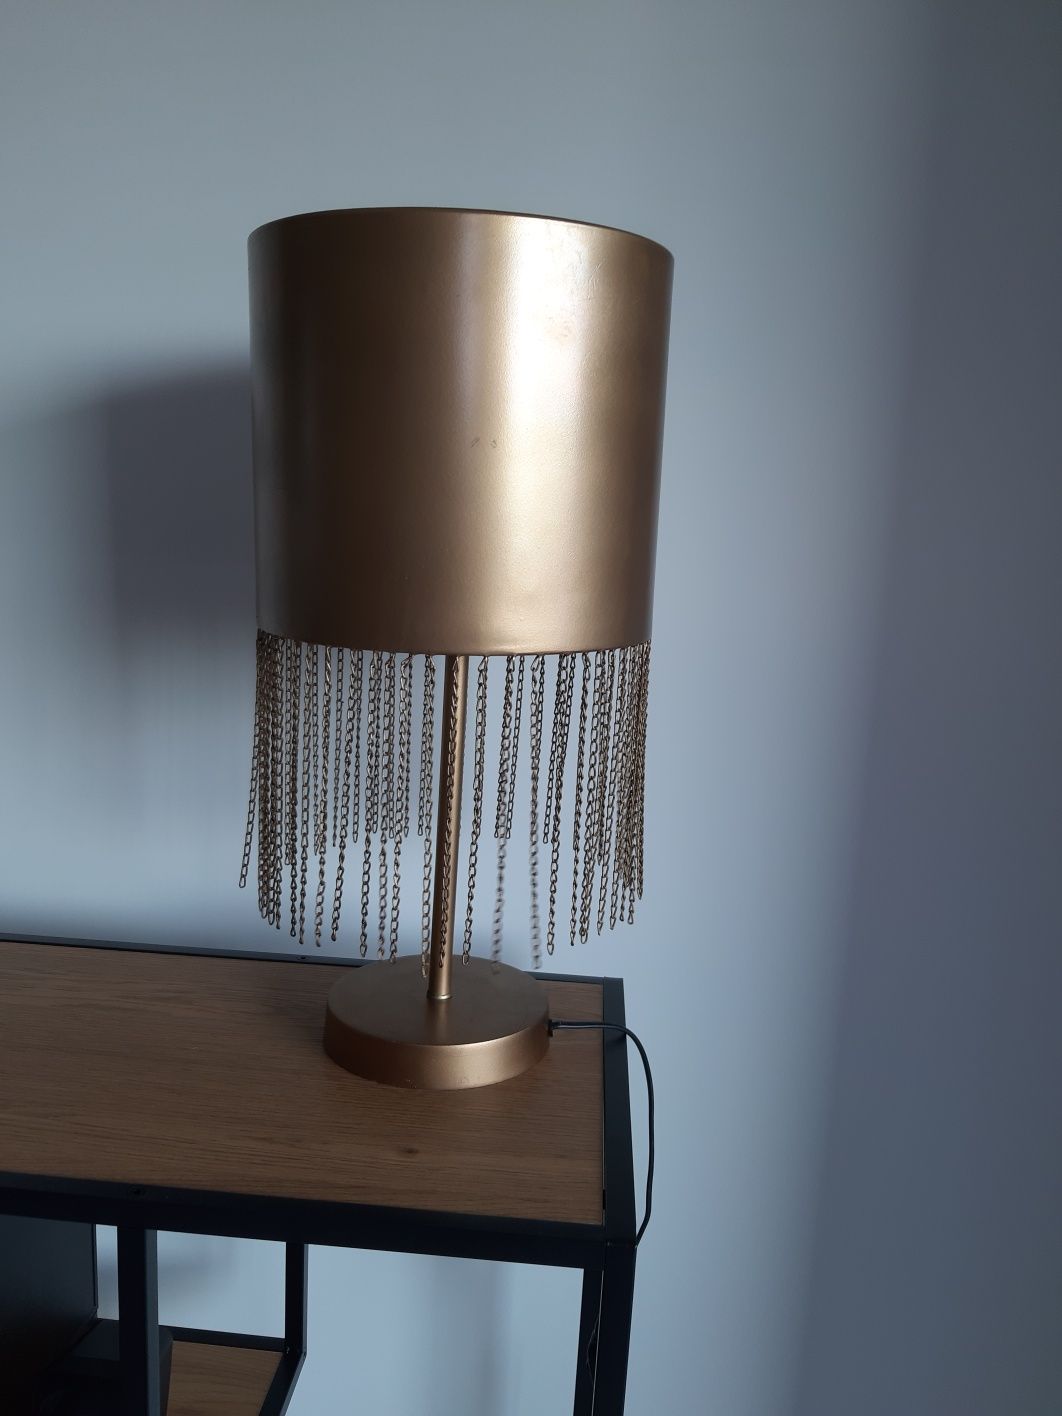 Lampa złota Indie kolekcja lampka vintage łańcuch home glamour boho zł